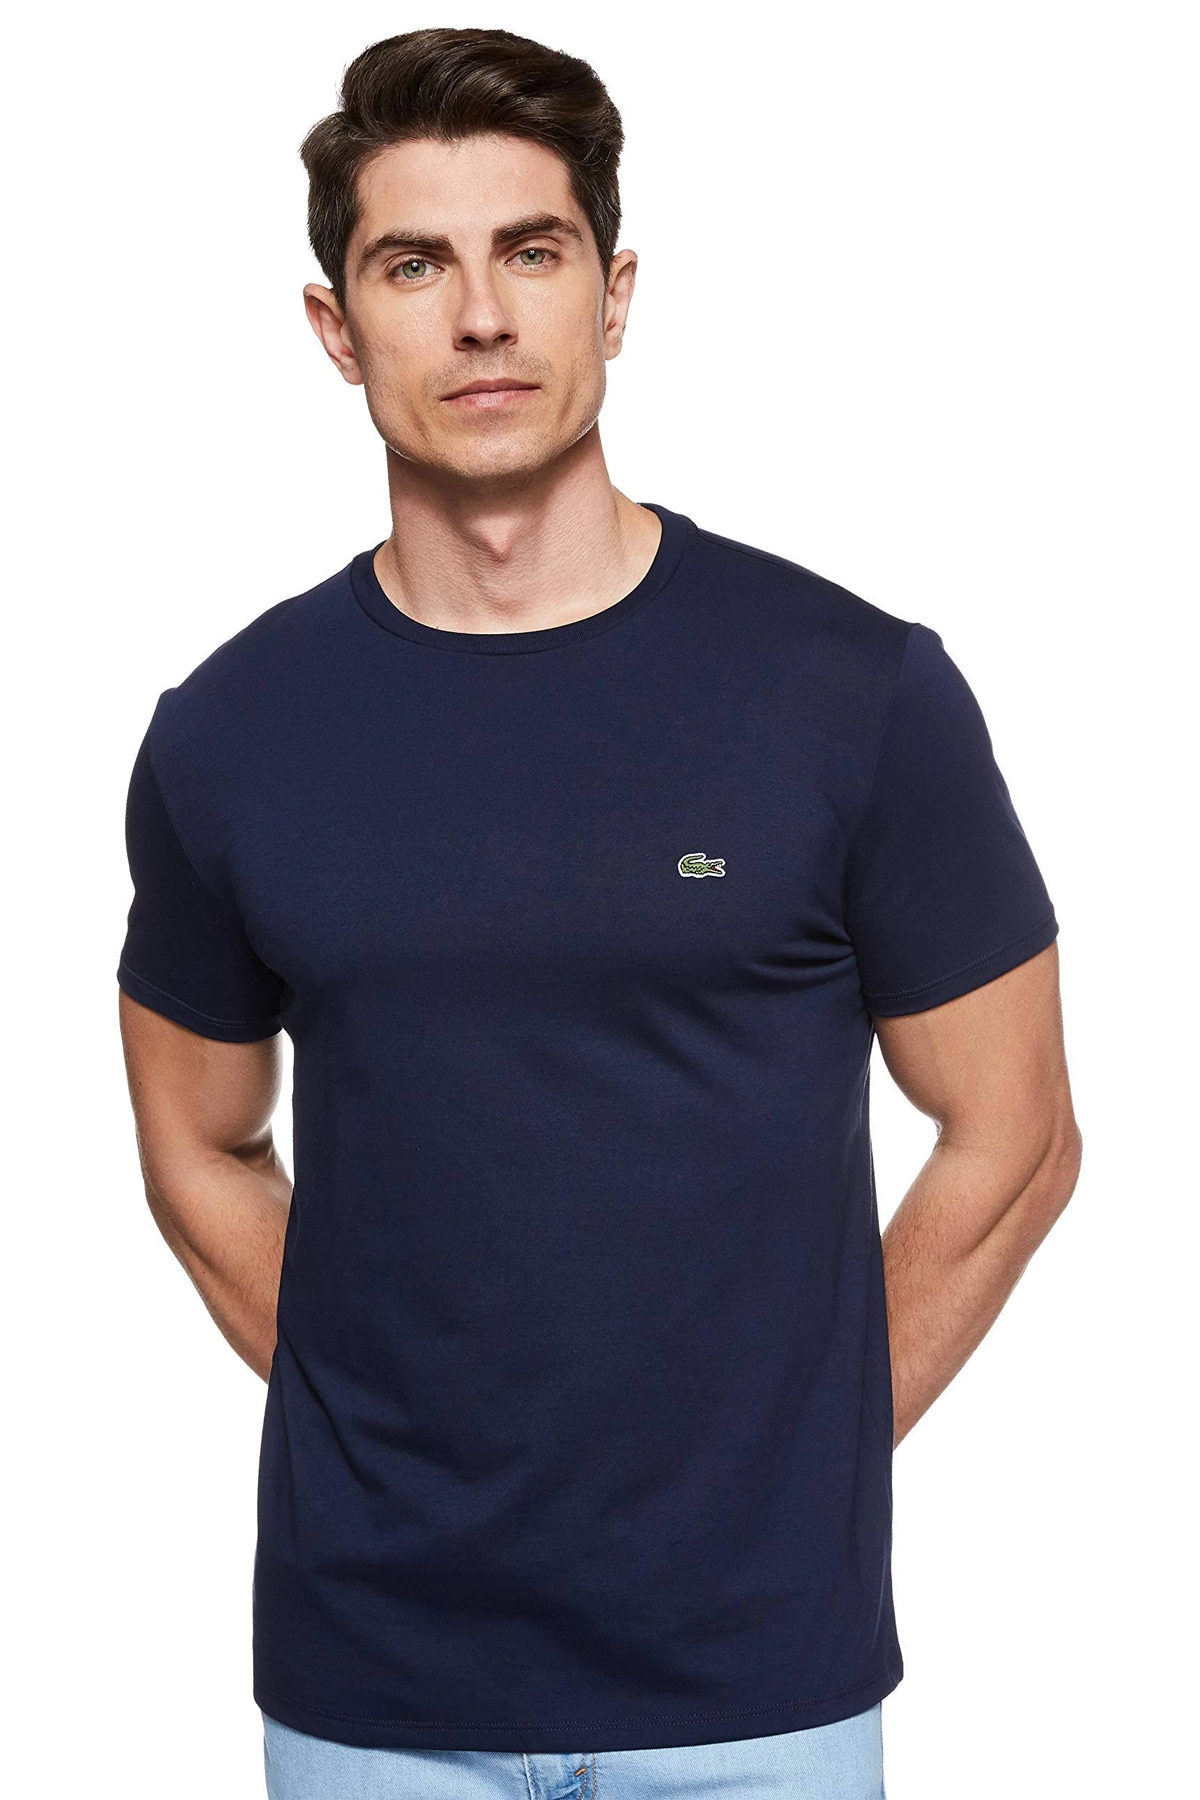 Lacoste Navy TH6709 custom work shirts